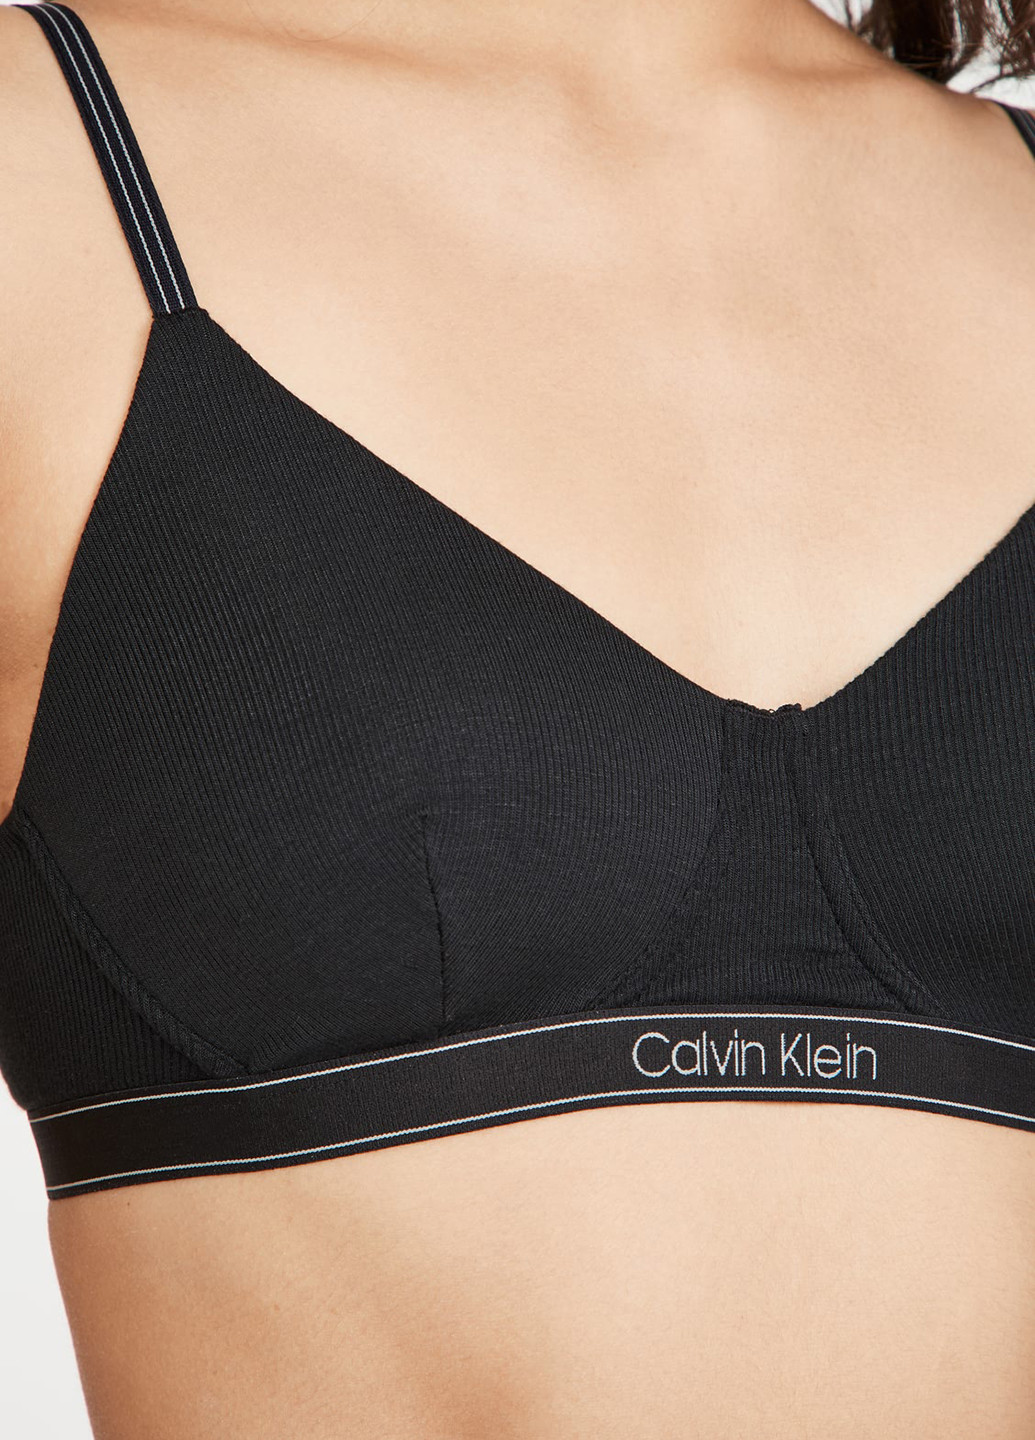 Чорний бюстгальтер Calvin Klein з кісточками трикотаж, модал